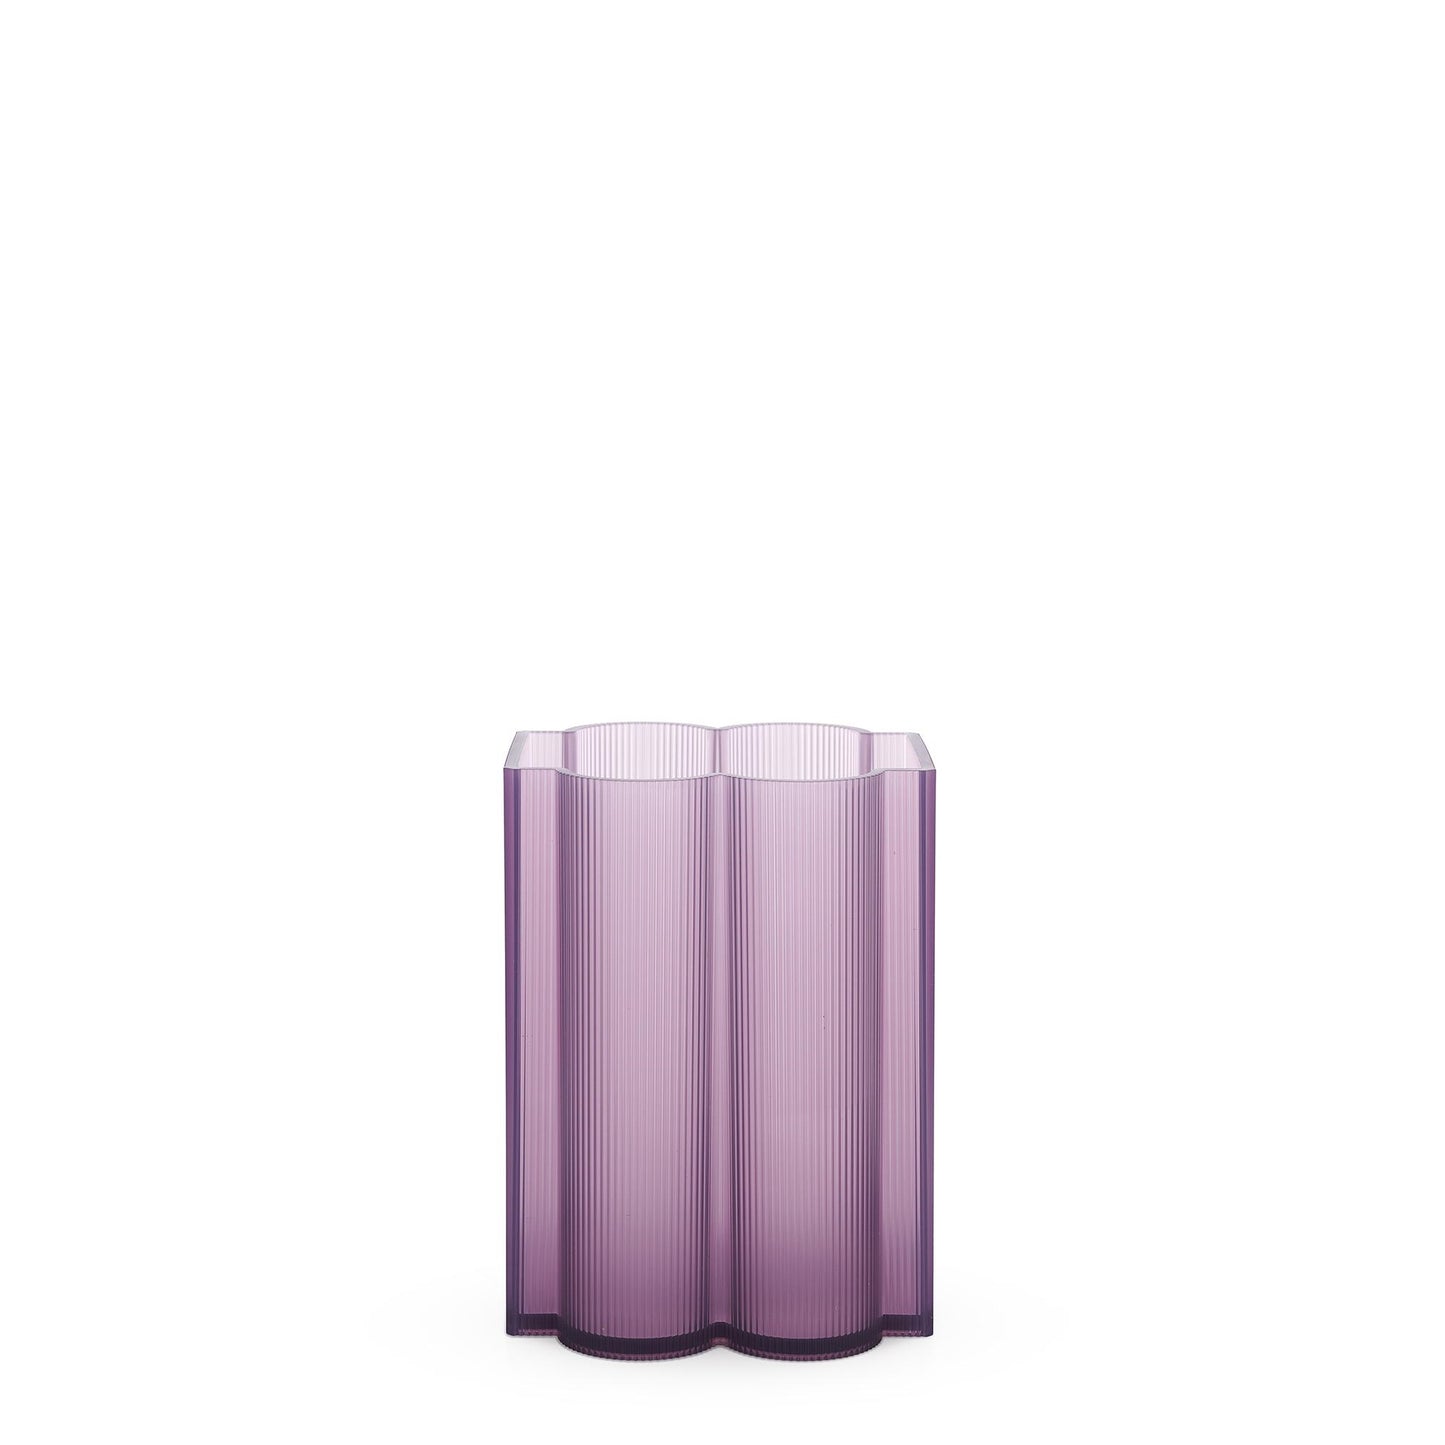 Okra Vase Low by Kartell #Purple